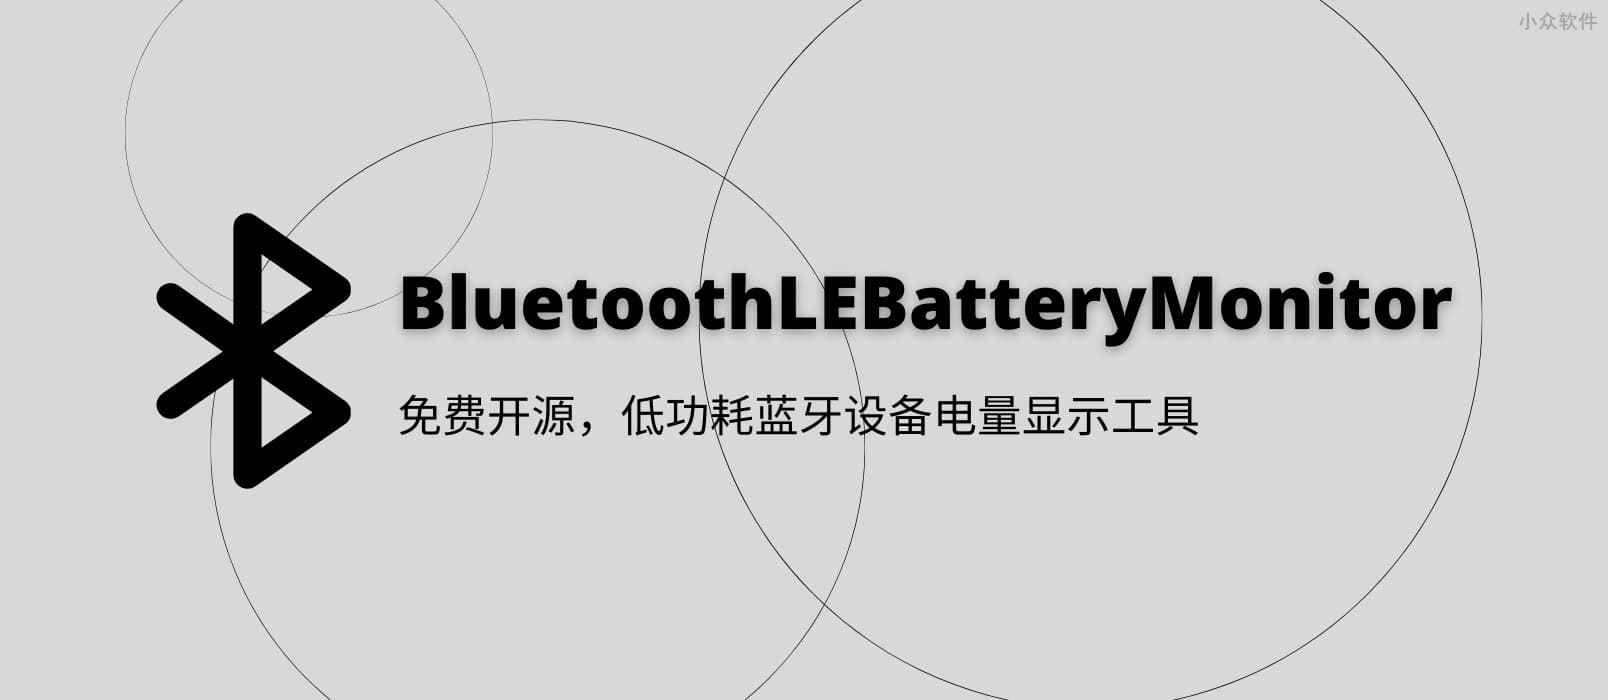 BluetoothLE Battery Monitor - 免费开源，低功耗蓝牙设备电量显示工具[Windows]